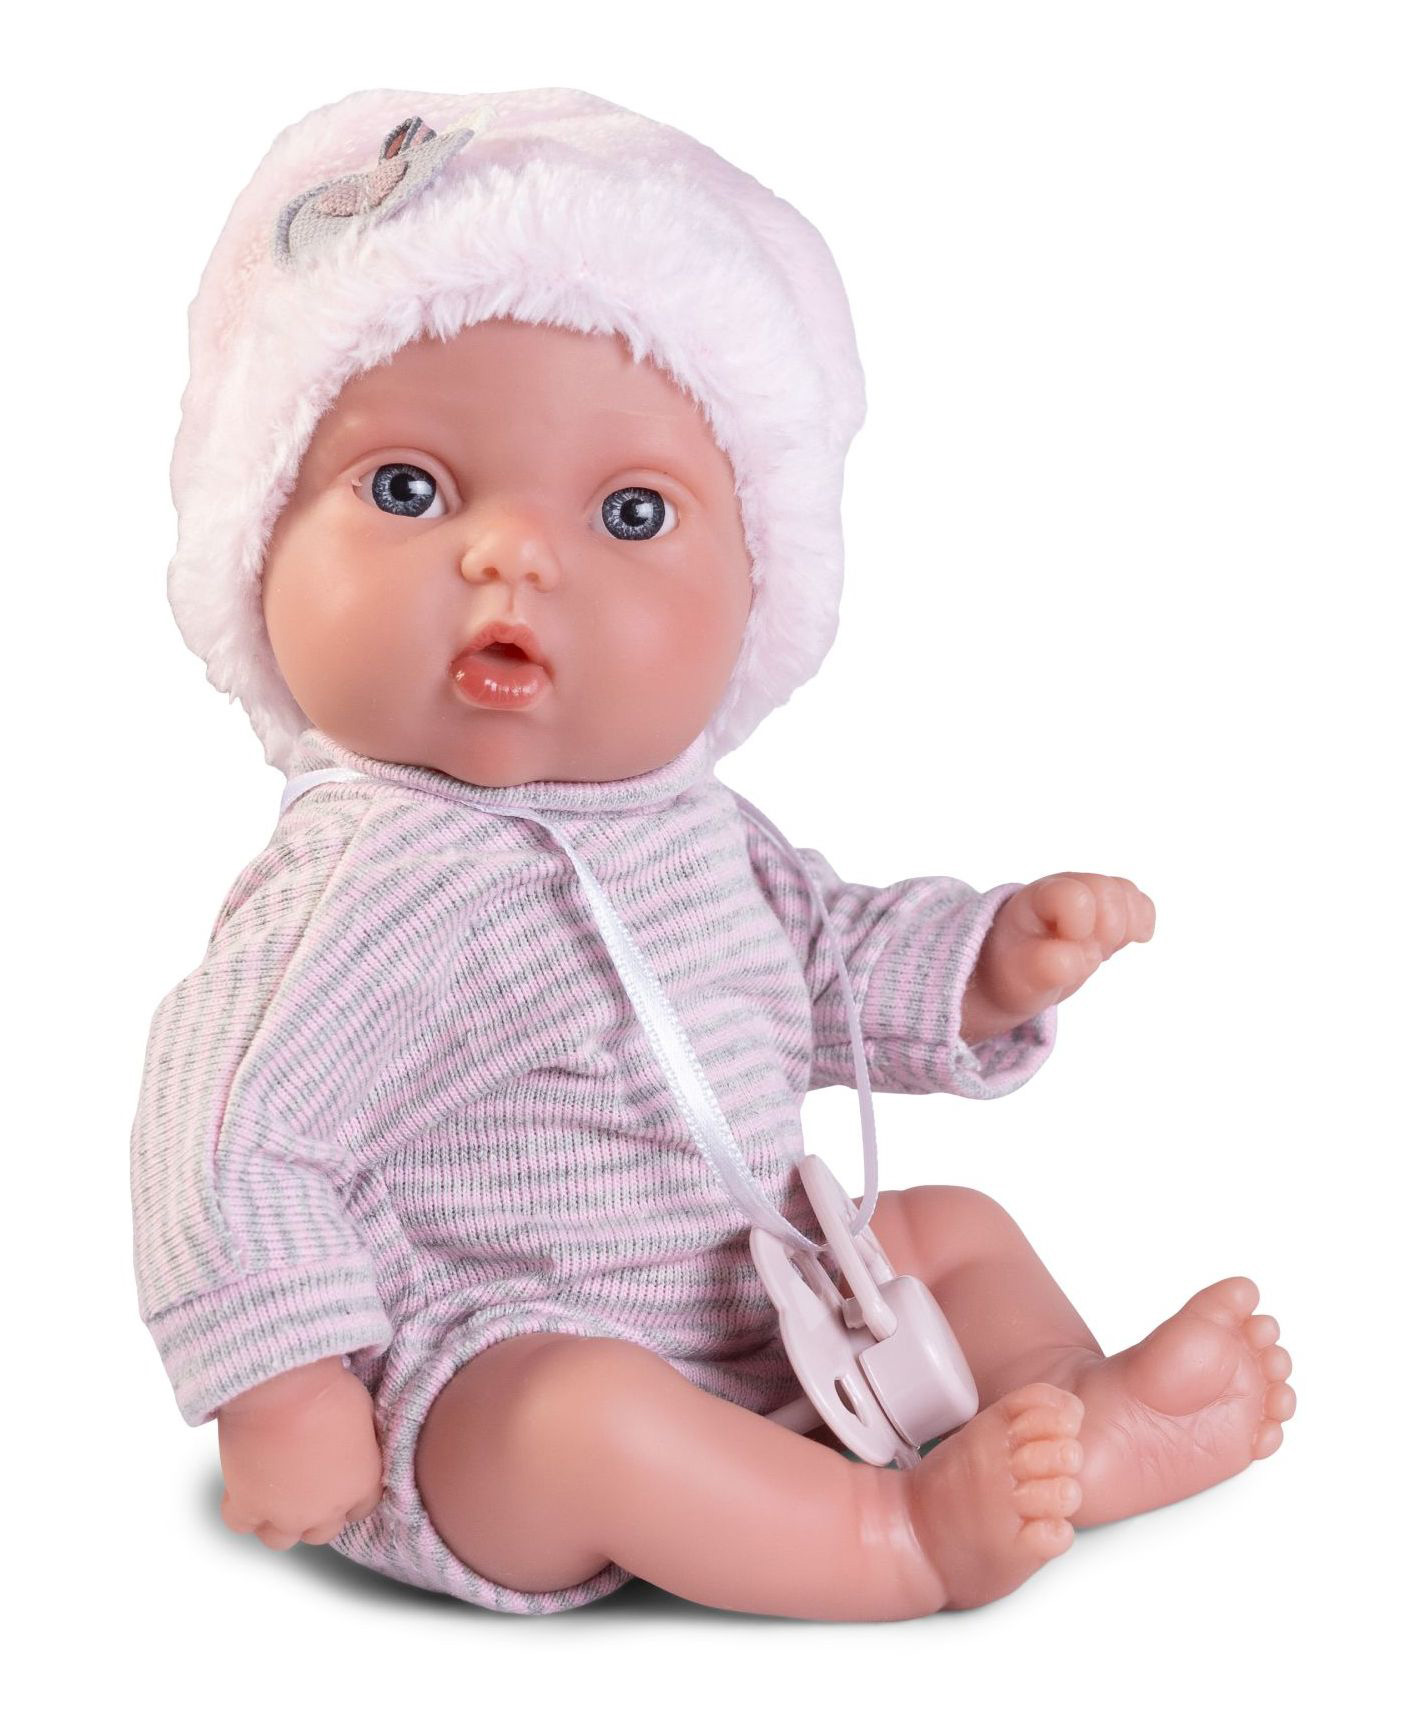 Antonio Juan 85316 Picolín -  miminko s celovinylovým tělem - 21 cm